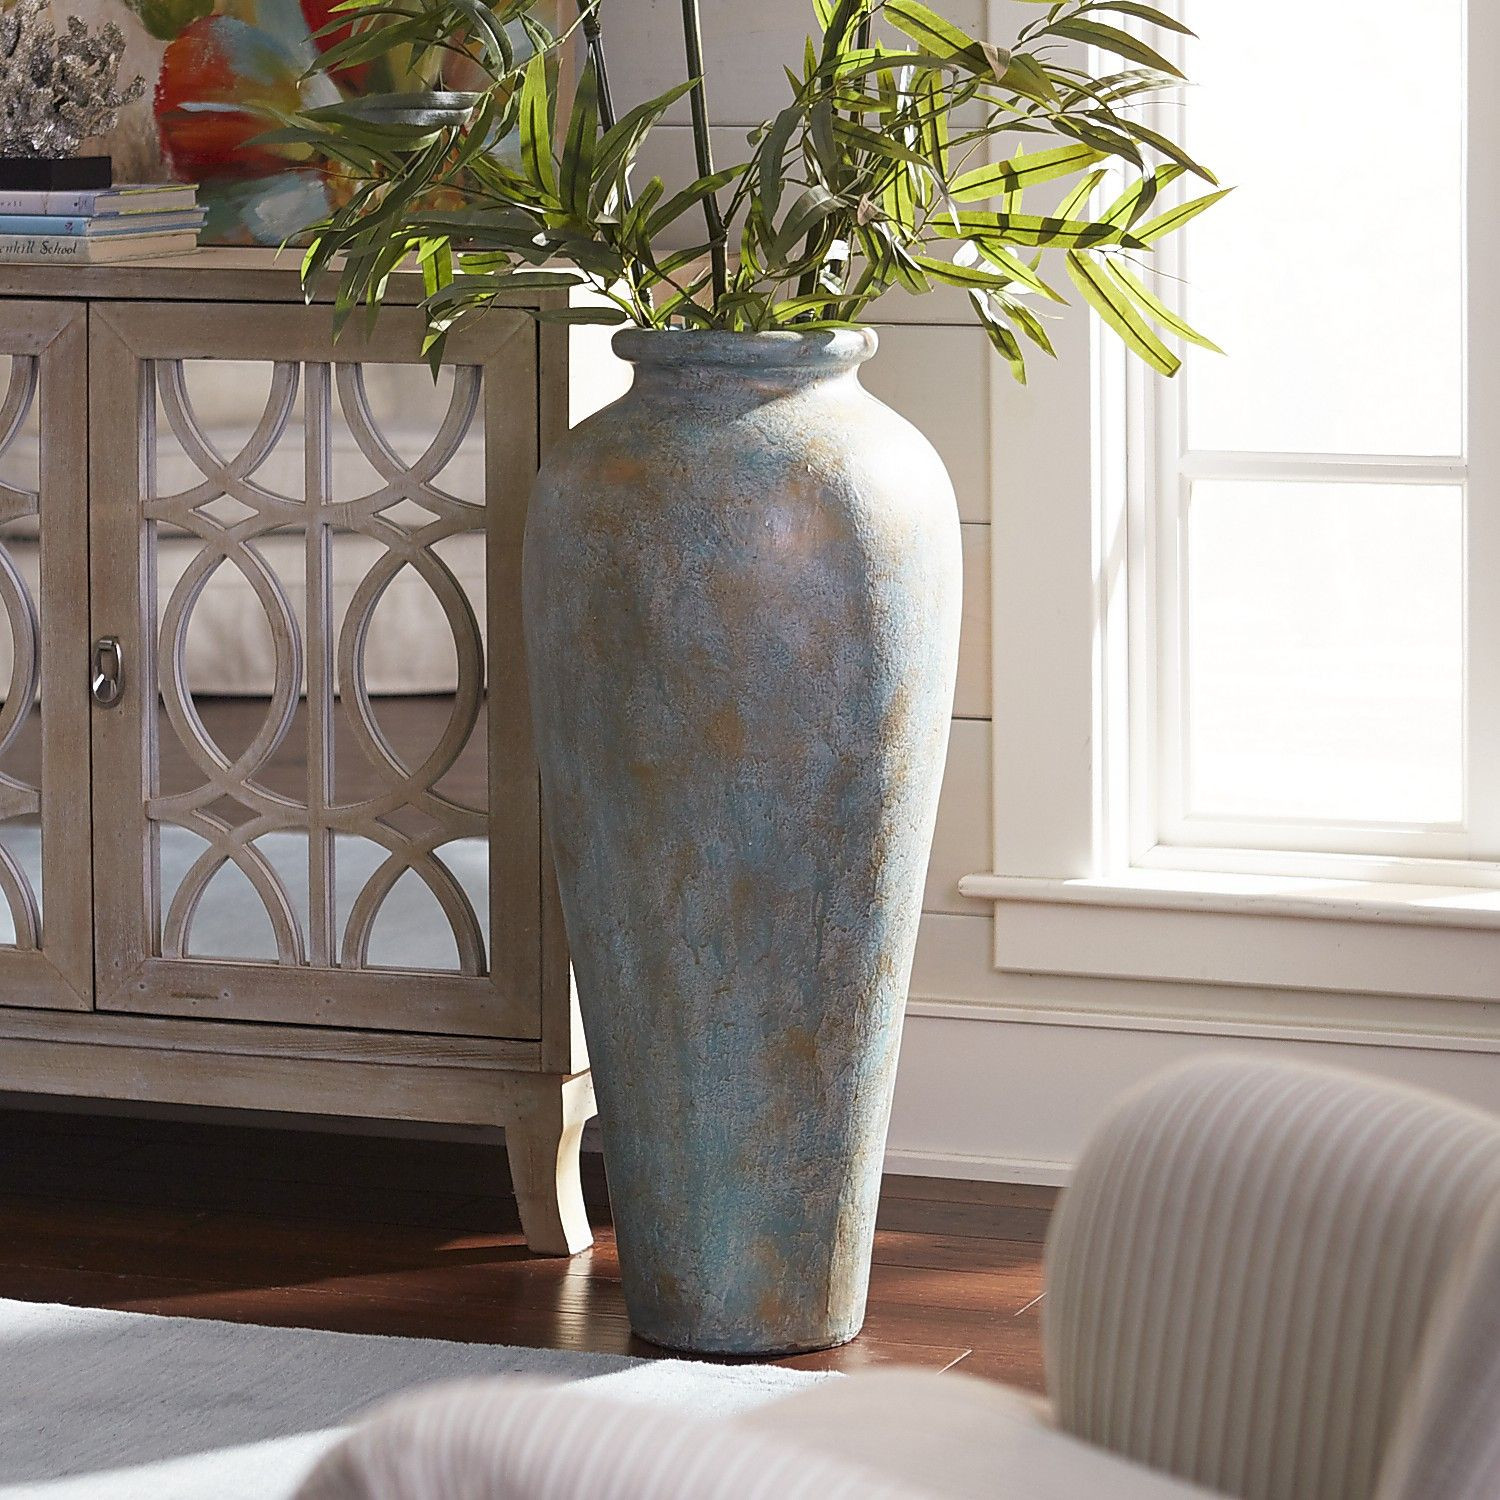 Large Flower Vase Ideas Of Blue Green Patina Urn Floor Vase Products Pinterest Flooring with Regard to Blue Green Patina Urn Floor Vase